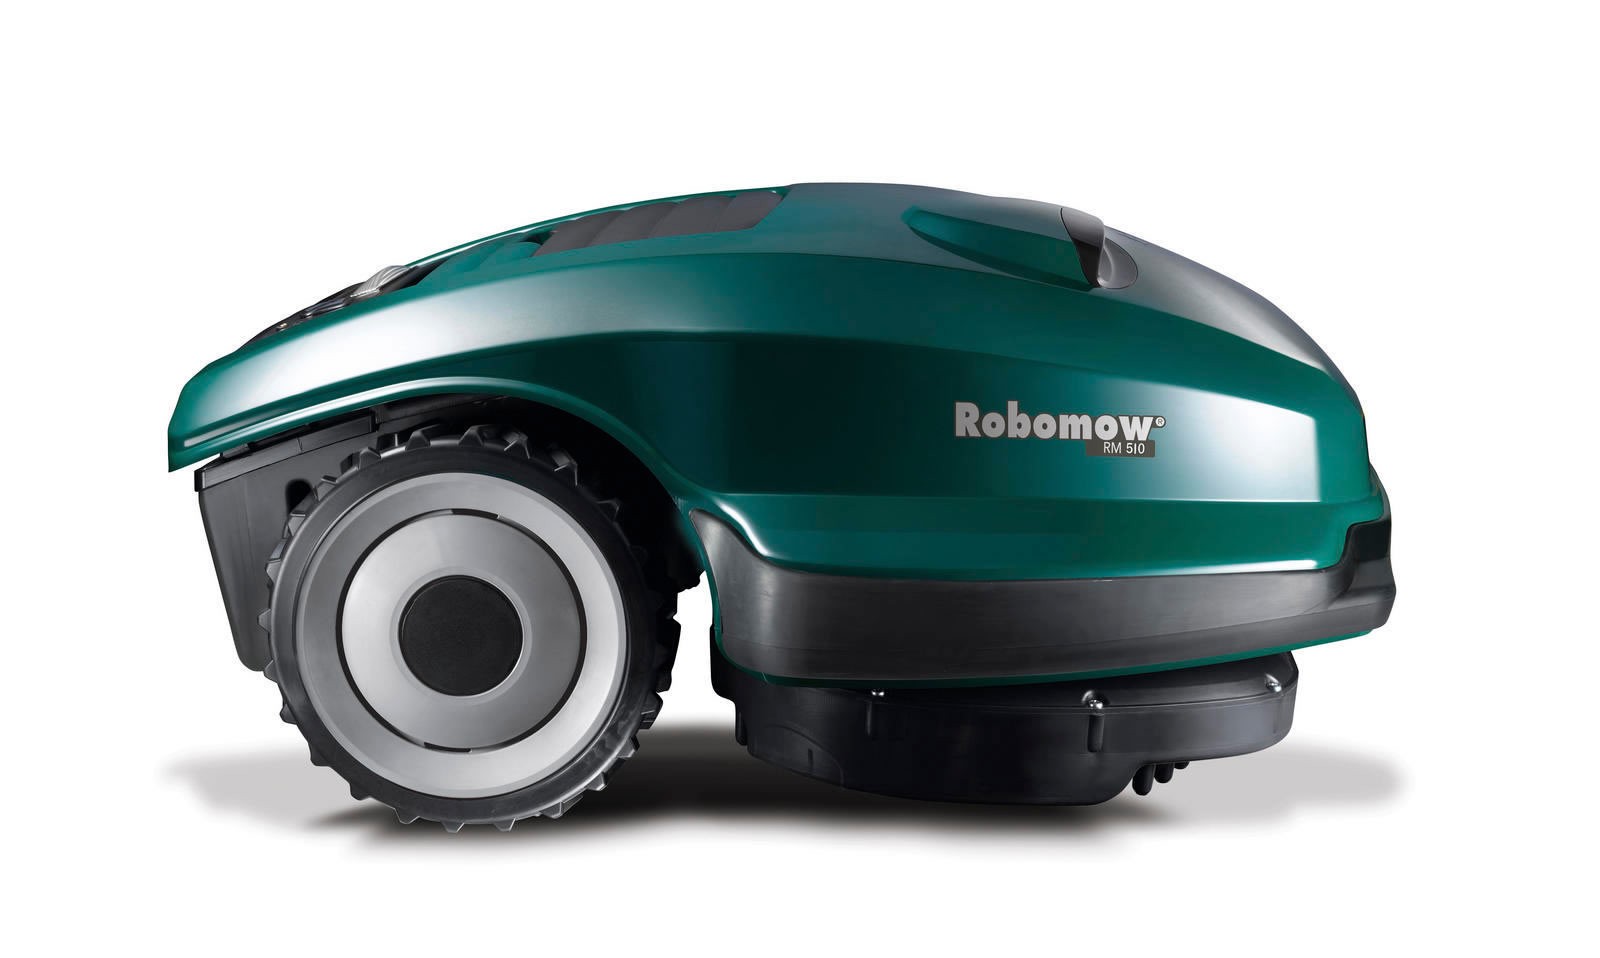 robomow-rm510-robotic-lawnmower-side-view-1600w